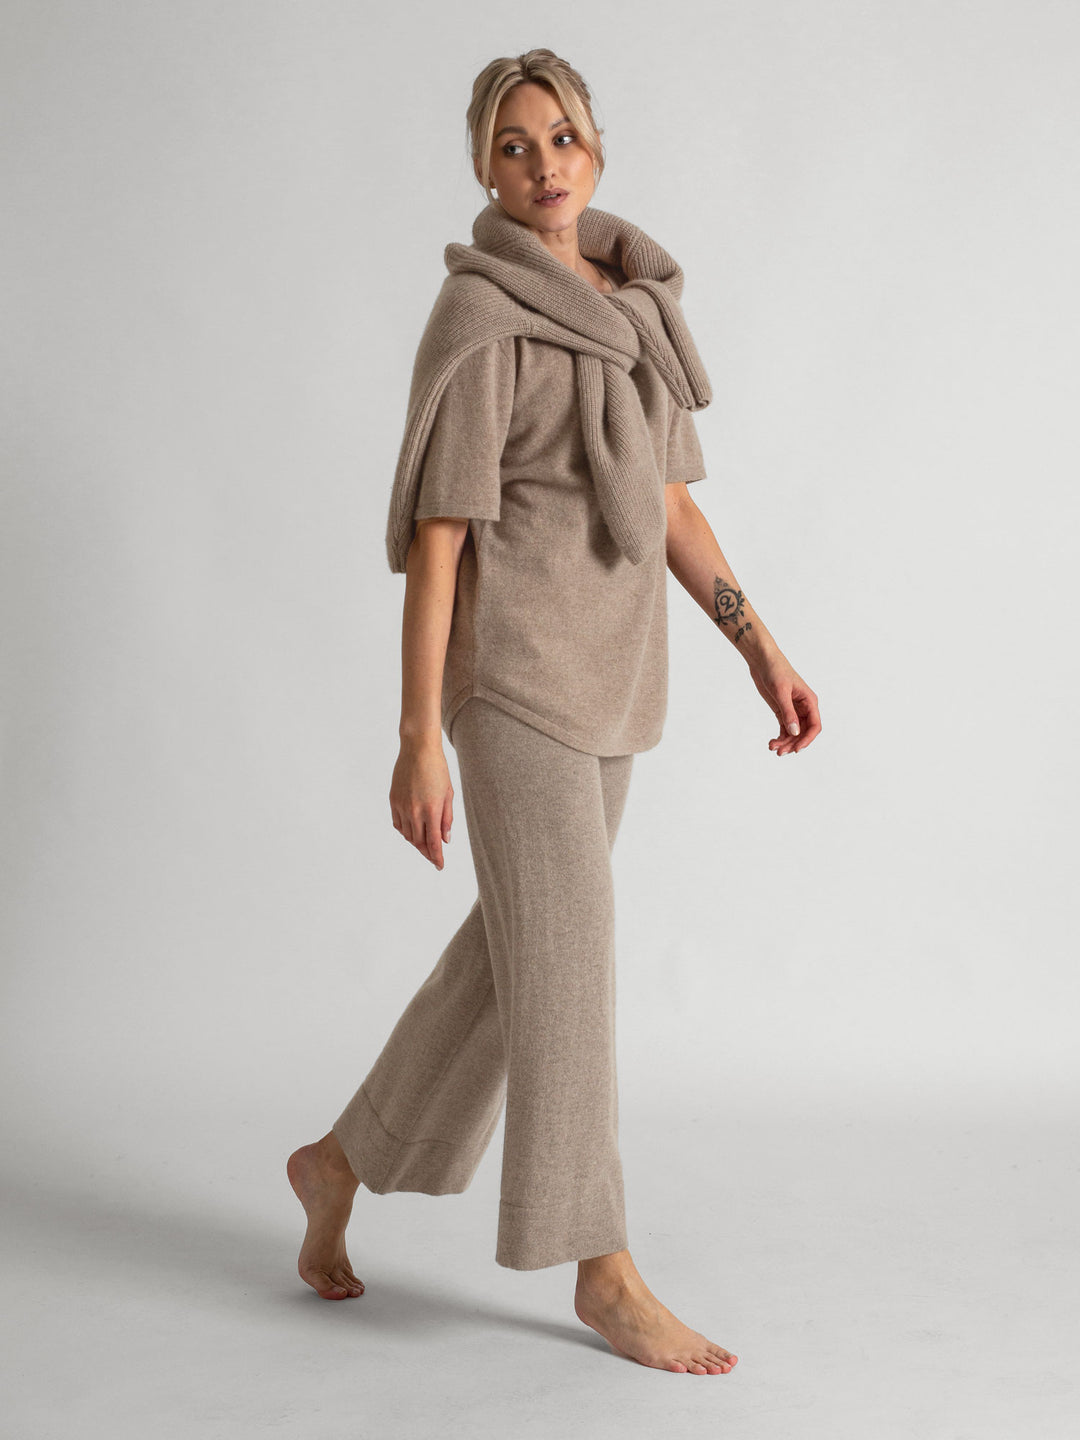 Htwon Womens Cashmere Sweatpants Winter Warm Lamb Wool Trousers Lined  Fleece Pants (Gray, XL) 